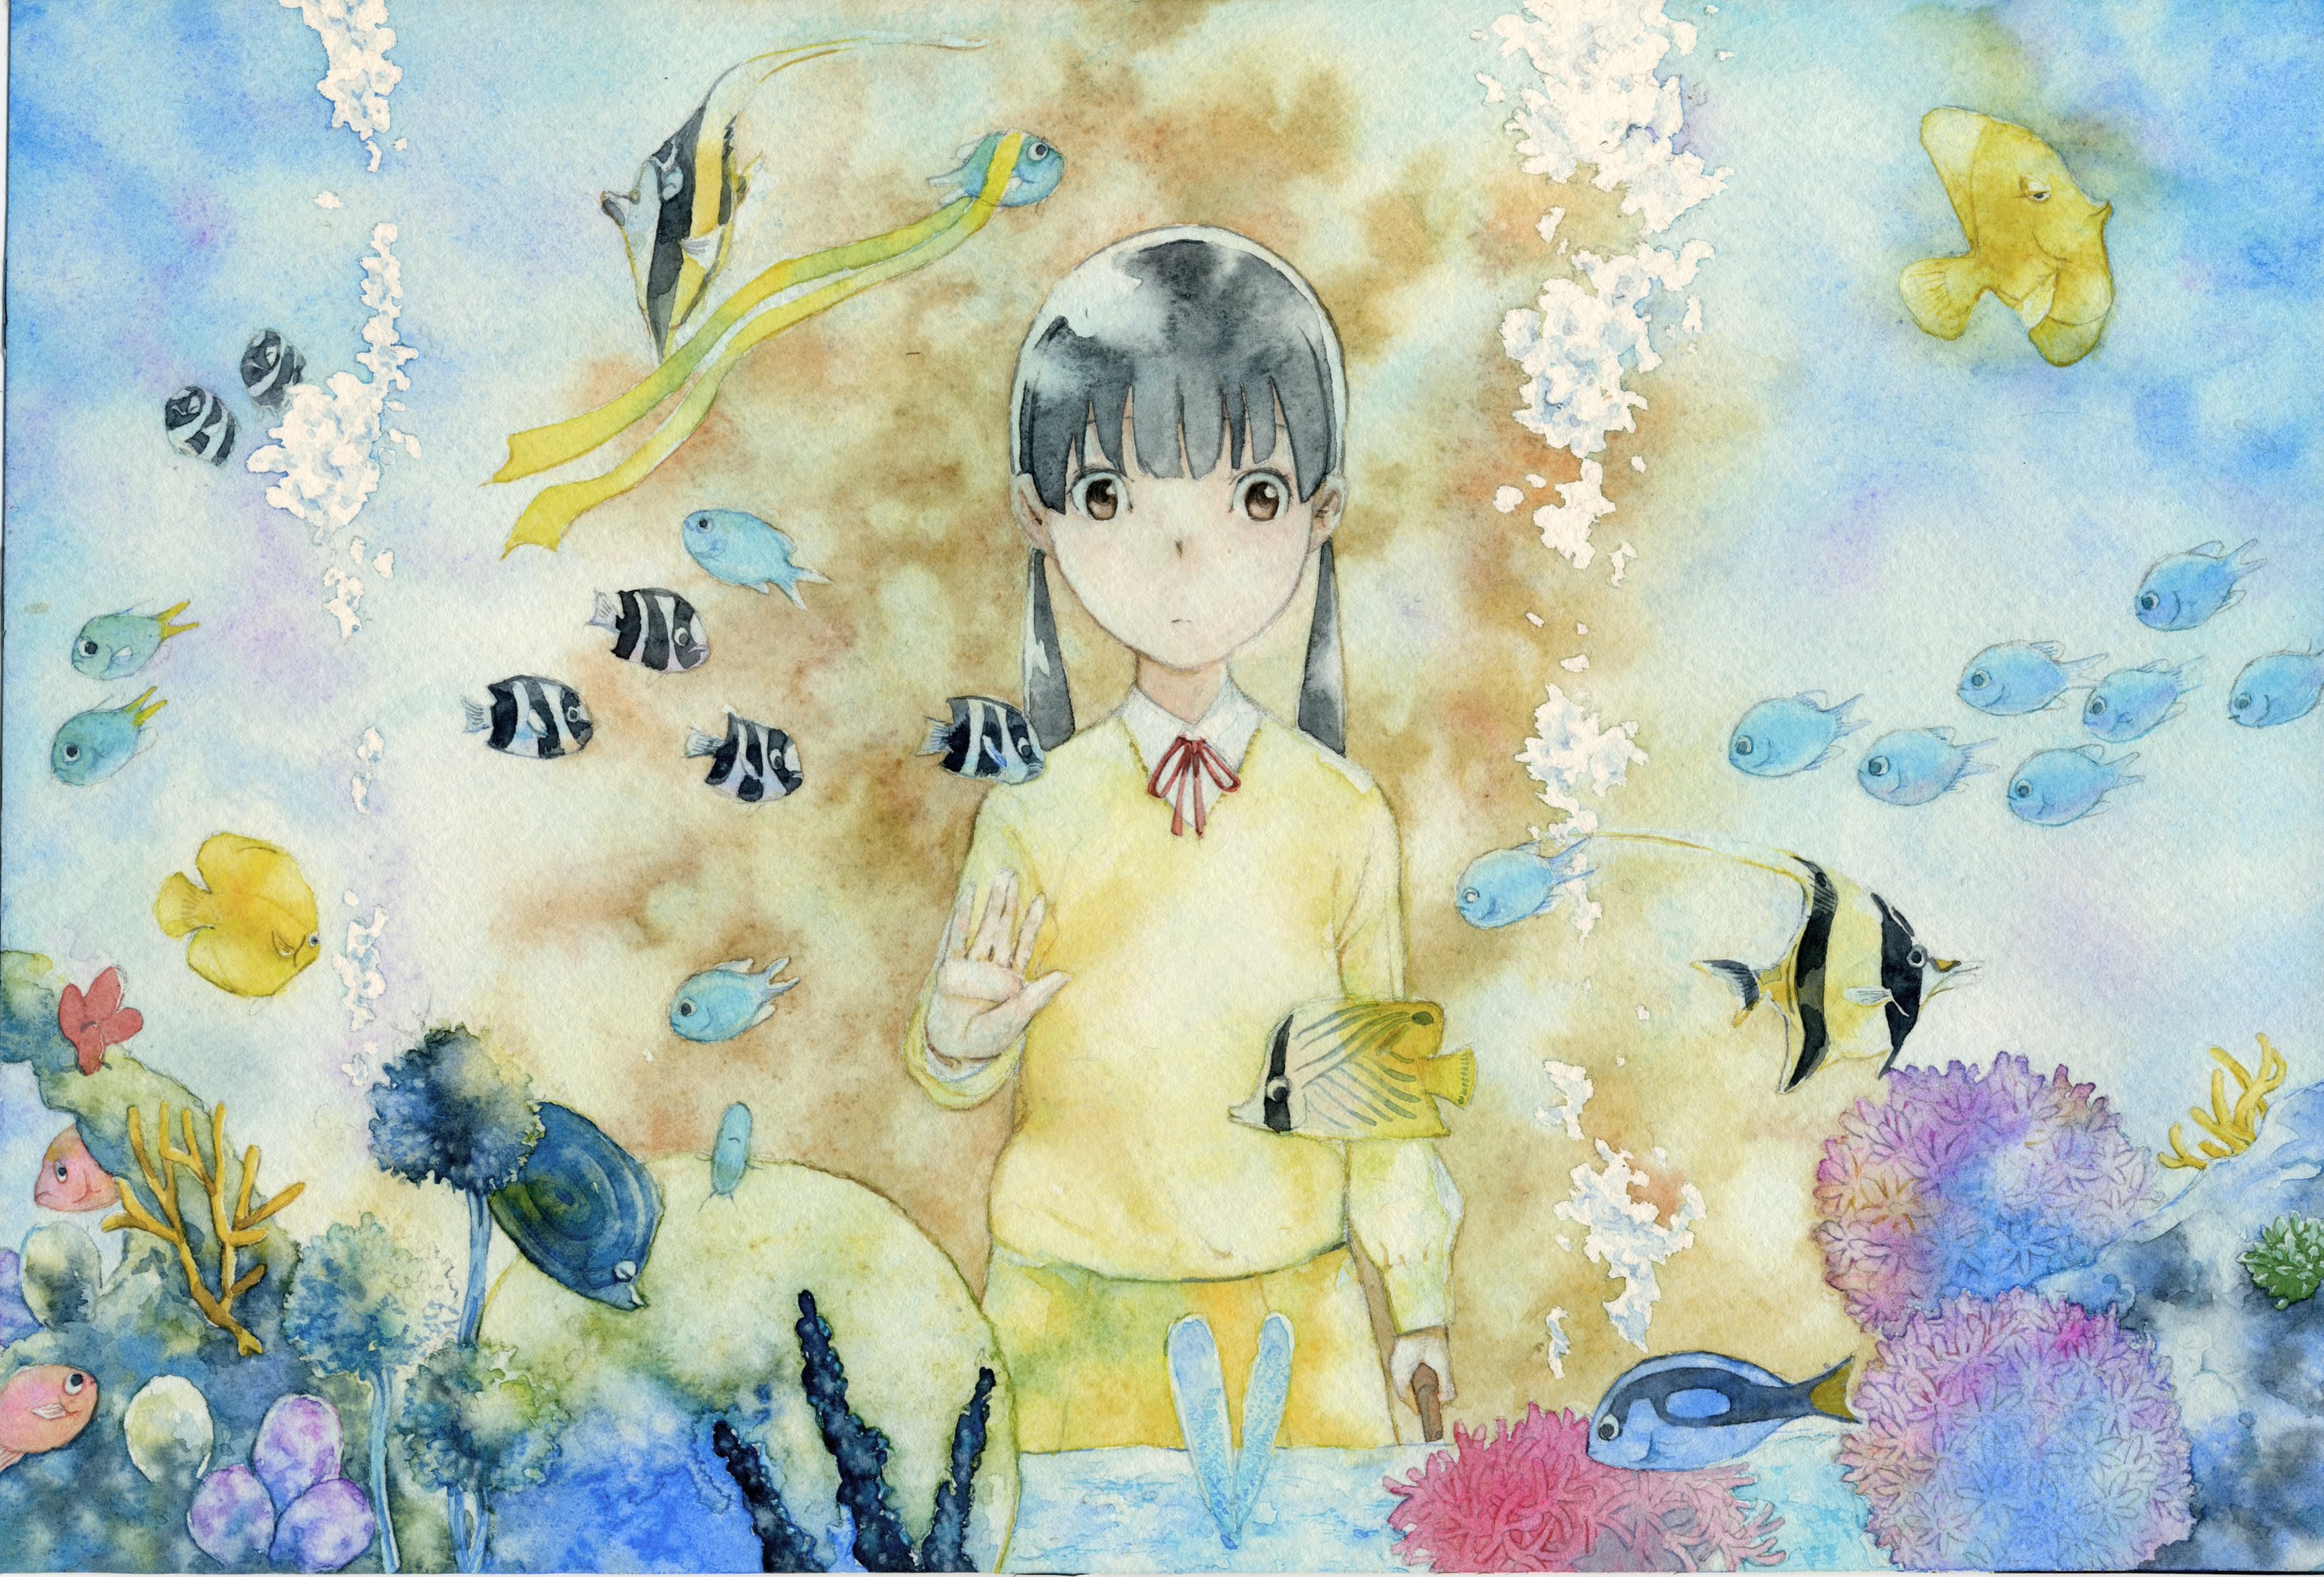 Anime Hourou Musuko HD Wallpaper | Background Image